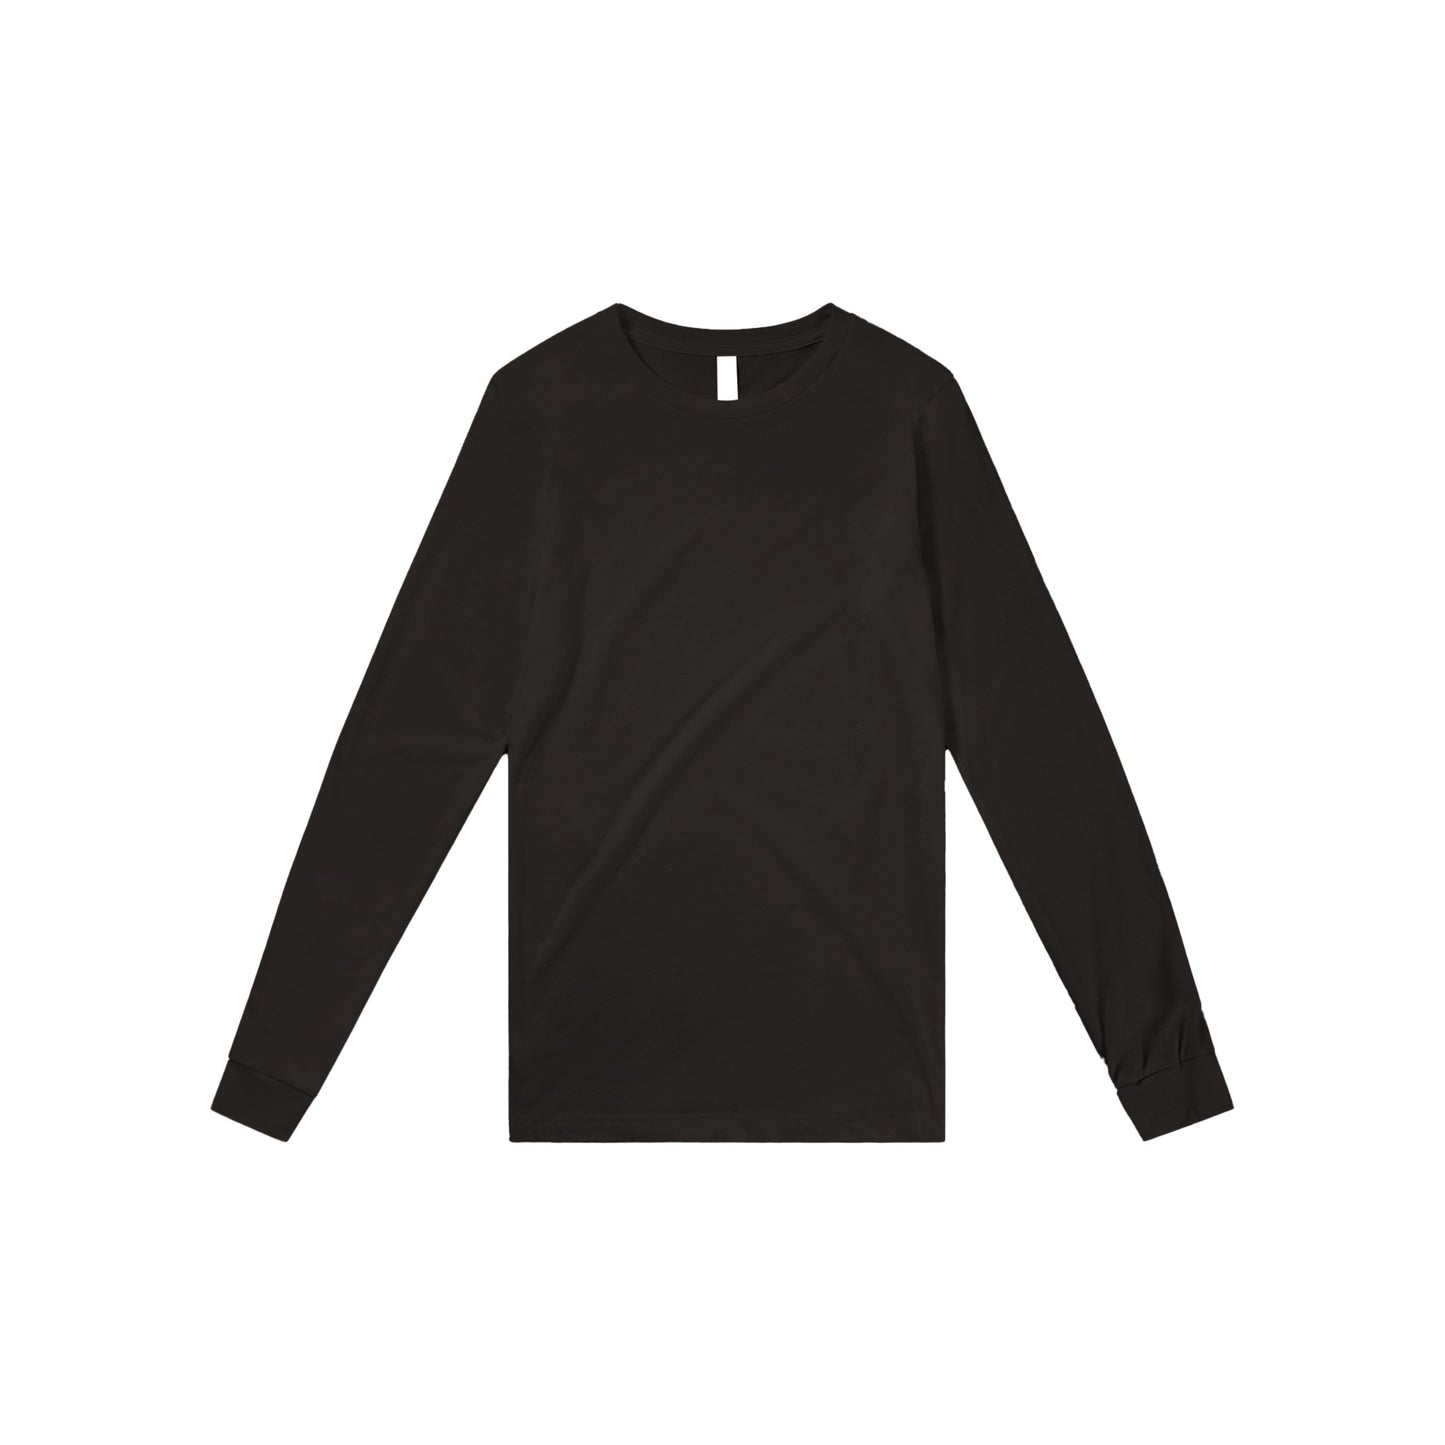 Black Premium Unisex Longsleeve T-shirt